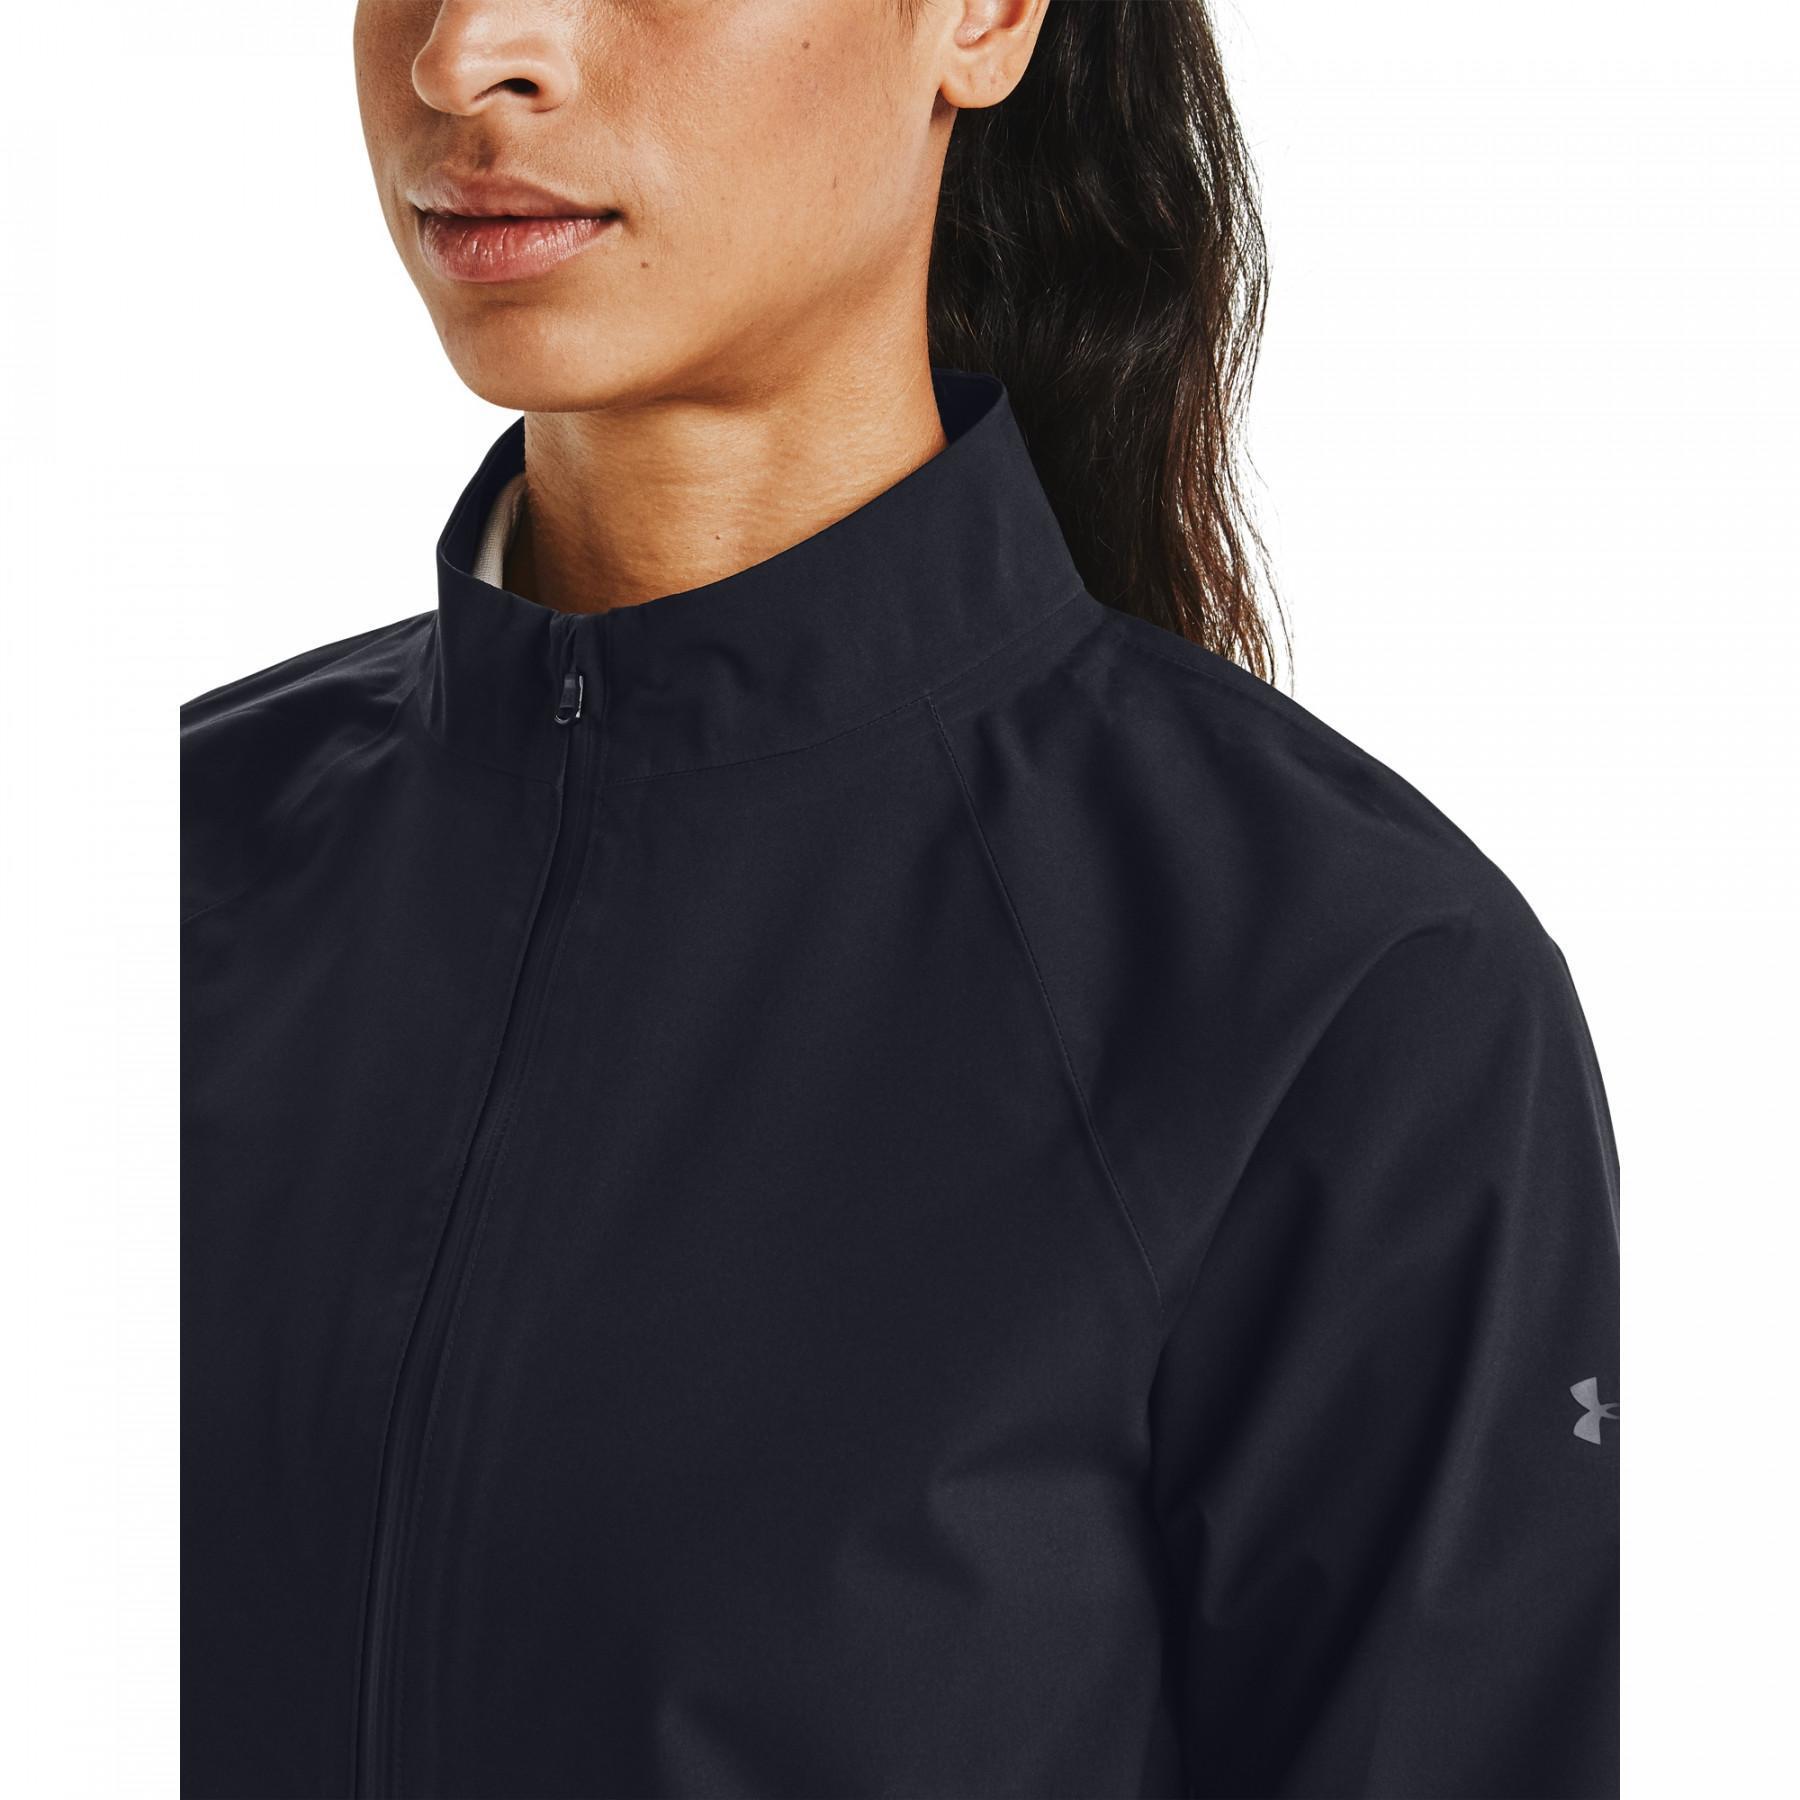 Women's waterproof jacket Under Armour Golf